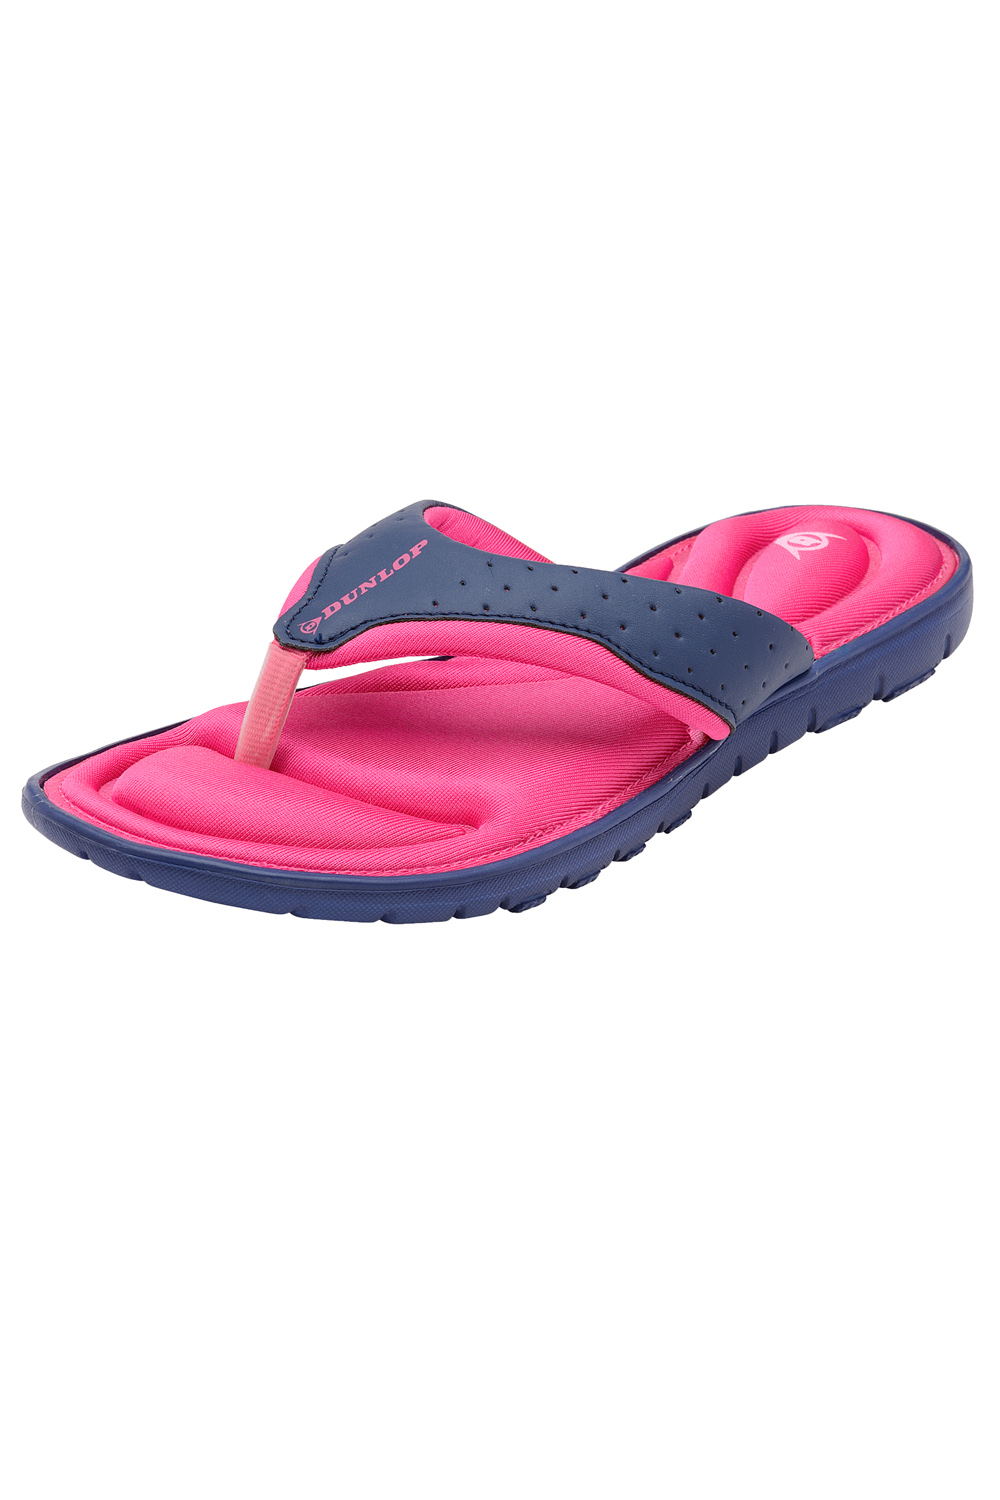 memory foam womens sandals